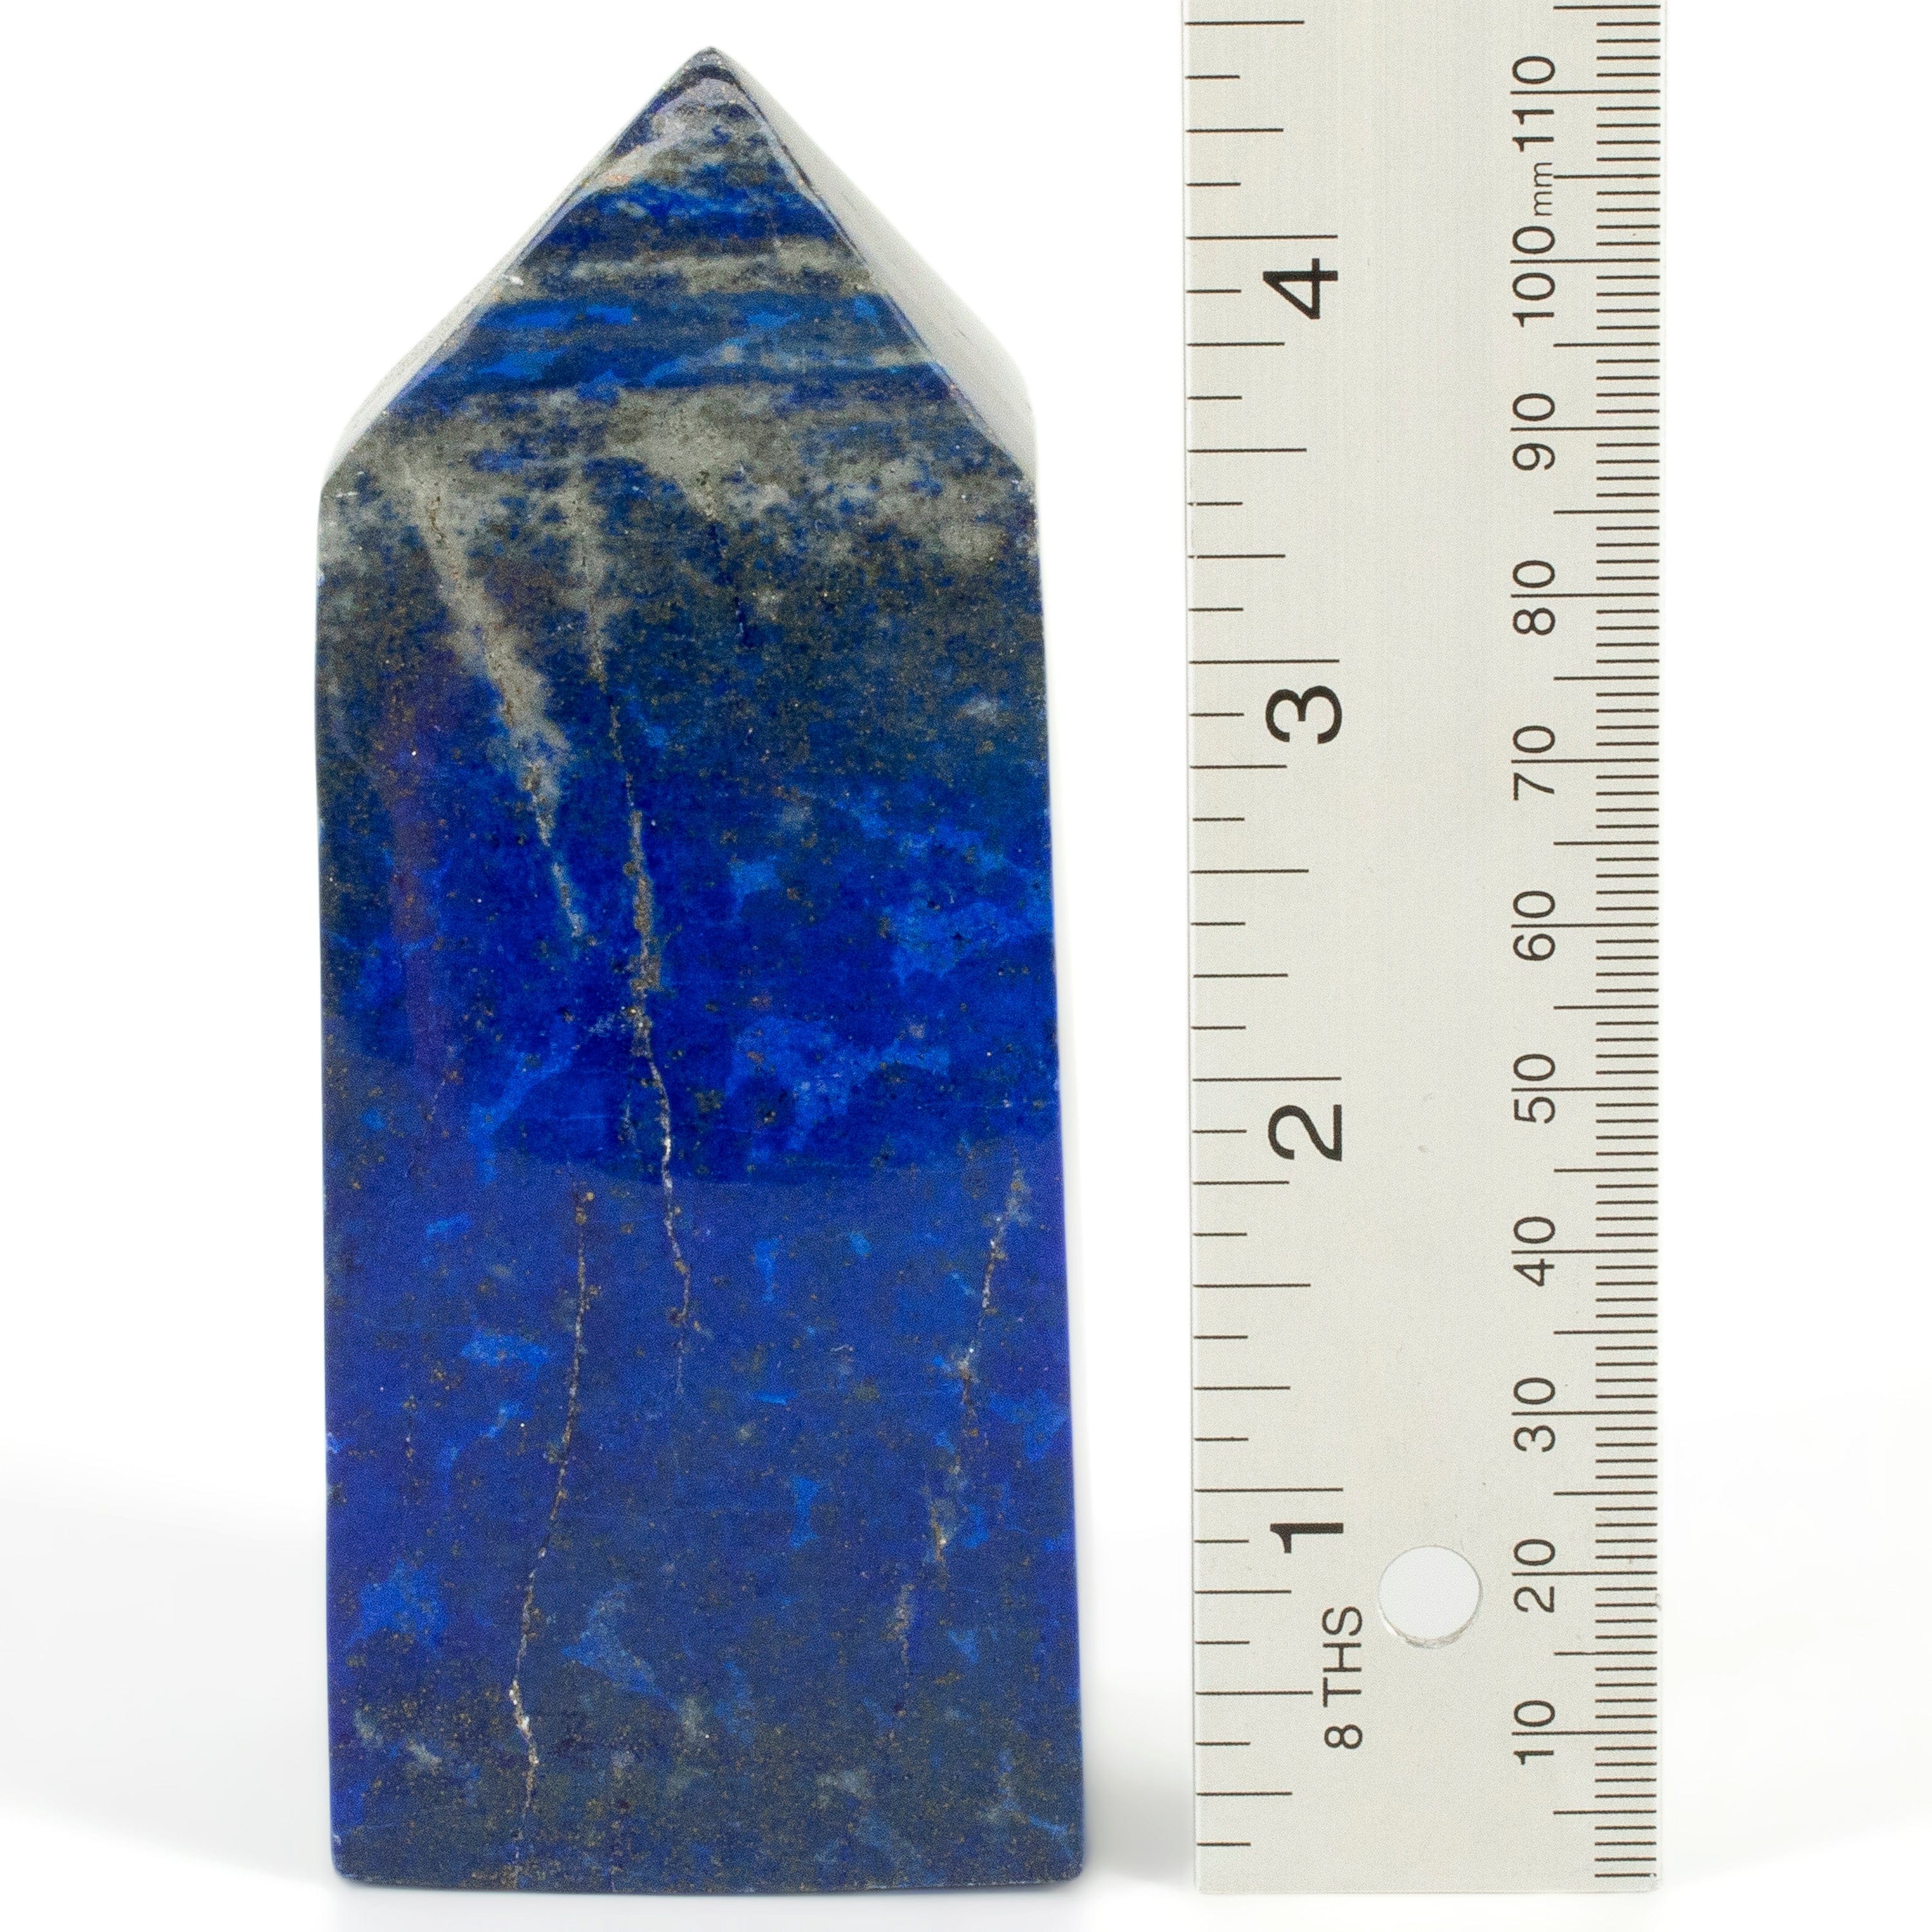 Kalifano Lapis Lapis Lazuli Polished Obelisk from Afghanistan - 4.5" / 655 grams LPOB1300.001